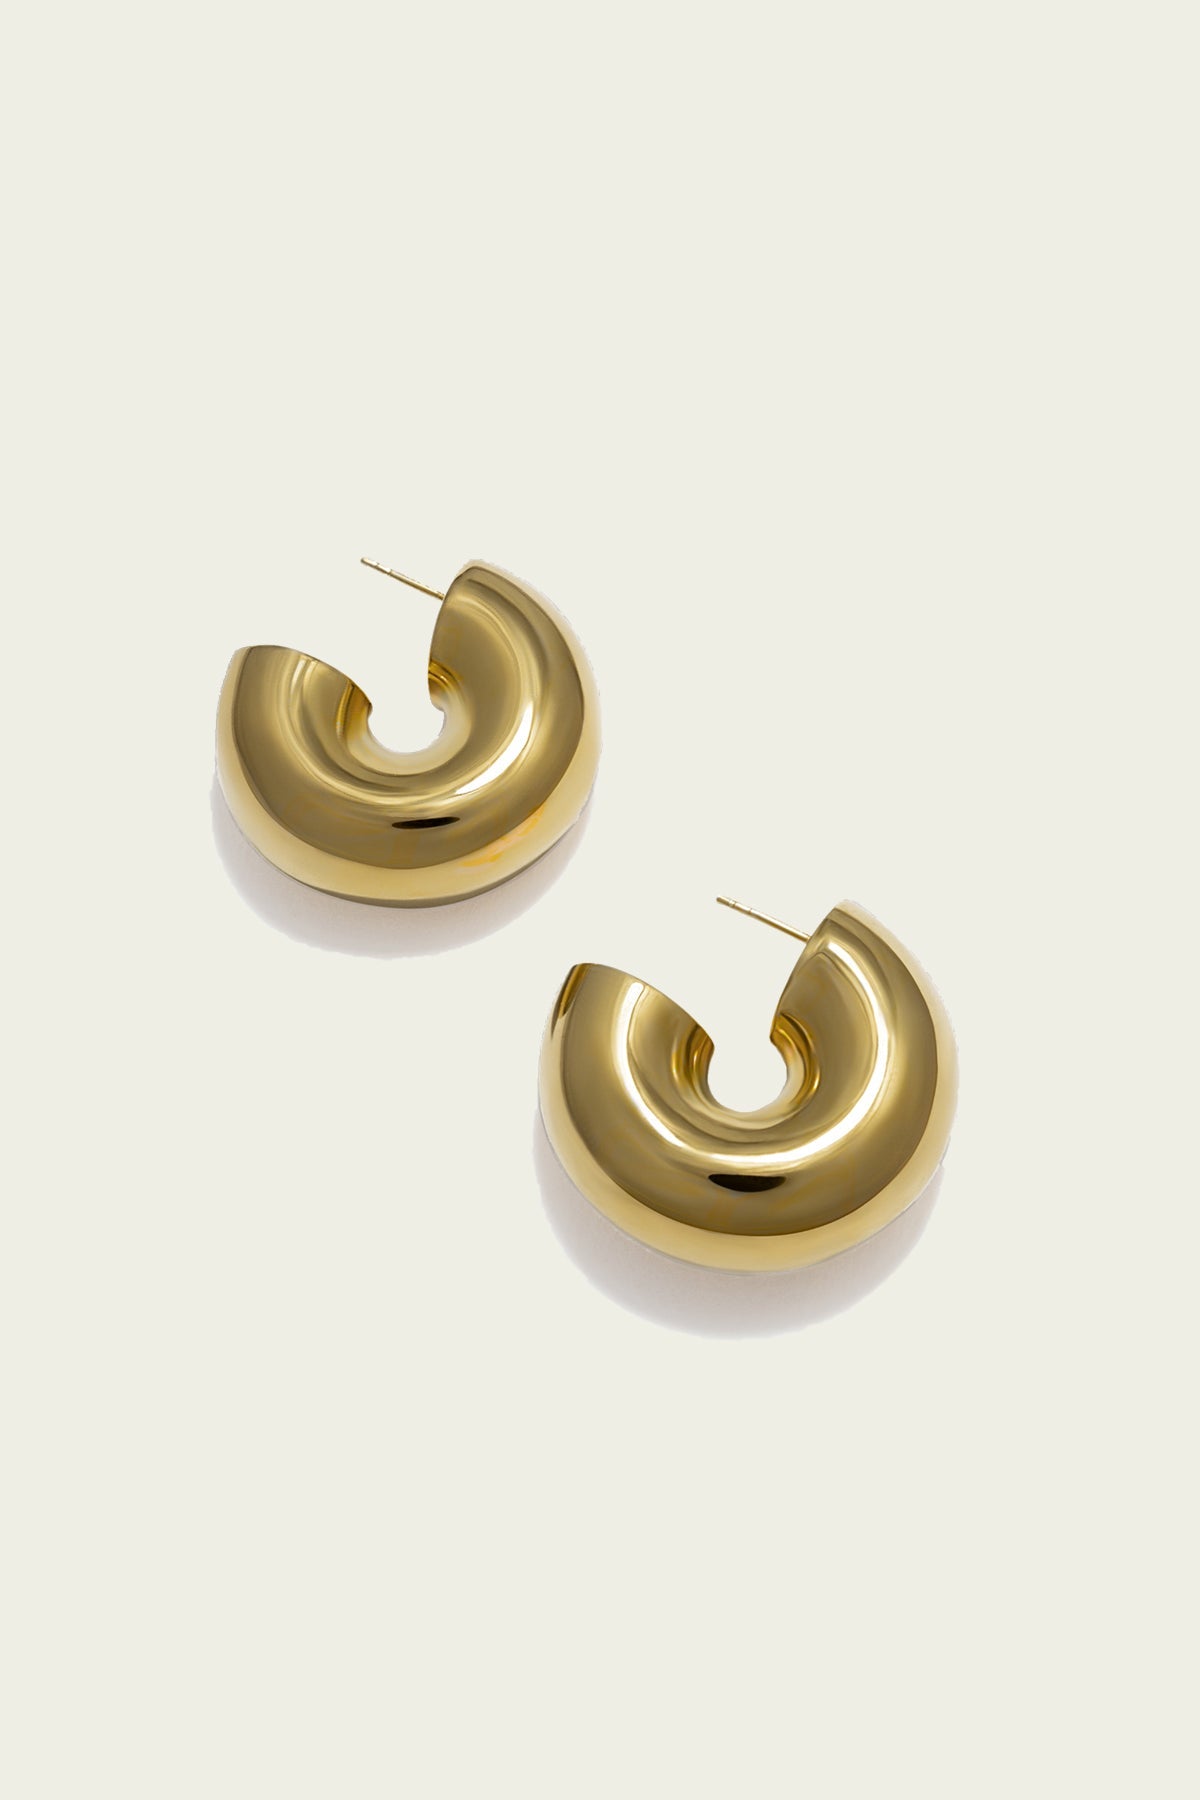 Beam Earrings in Gold - shop-olivia.com